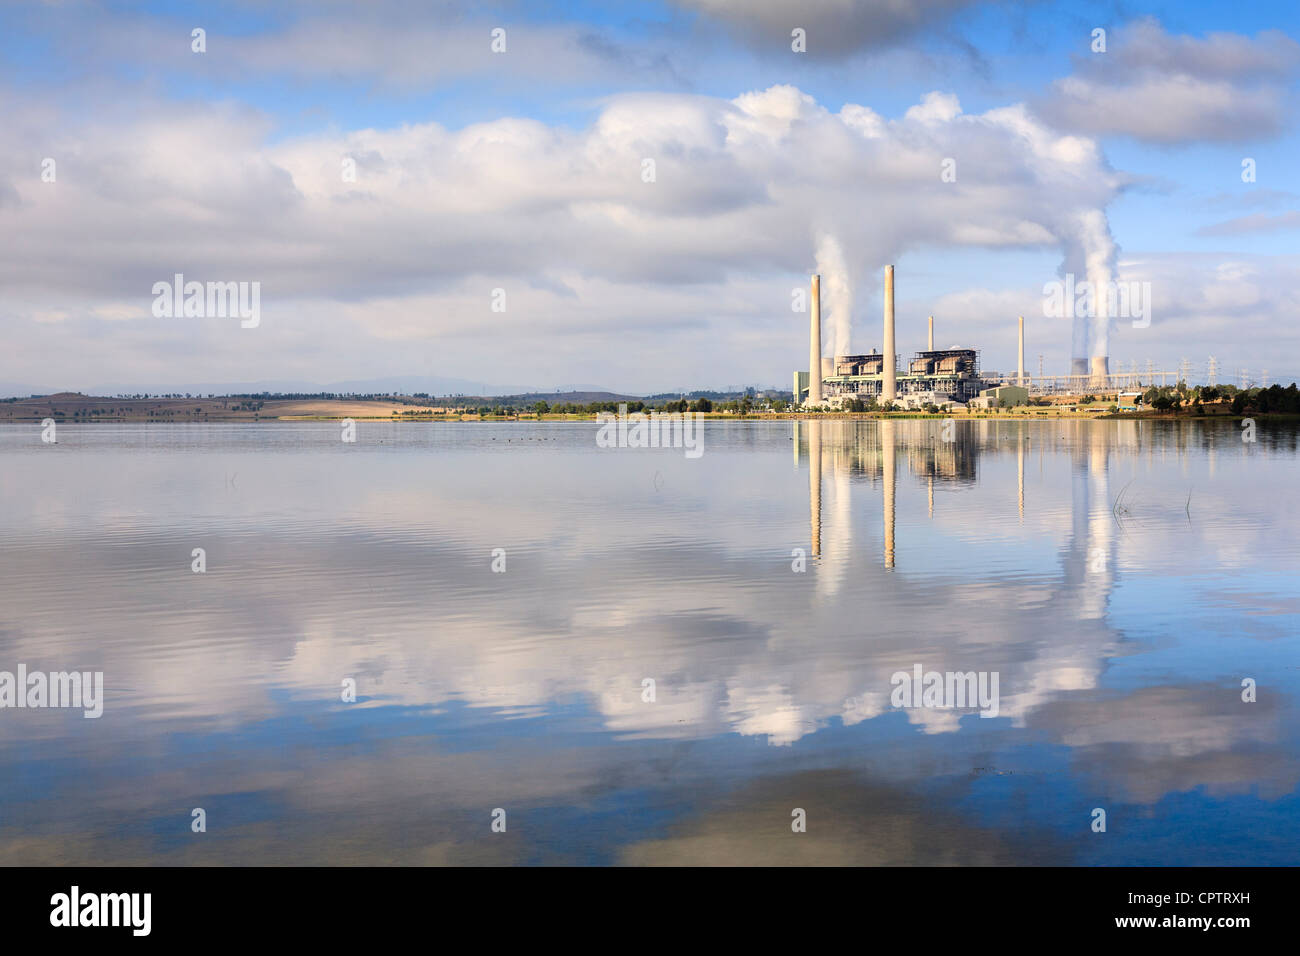 Lake Liddell coal fired power station, reflecting in Lake Liddell, NSW, Australia. Stock Photo